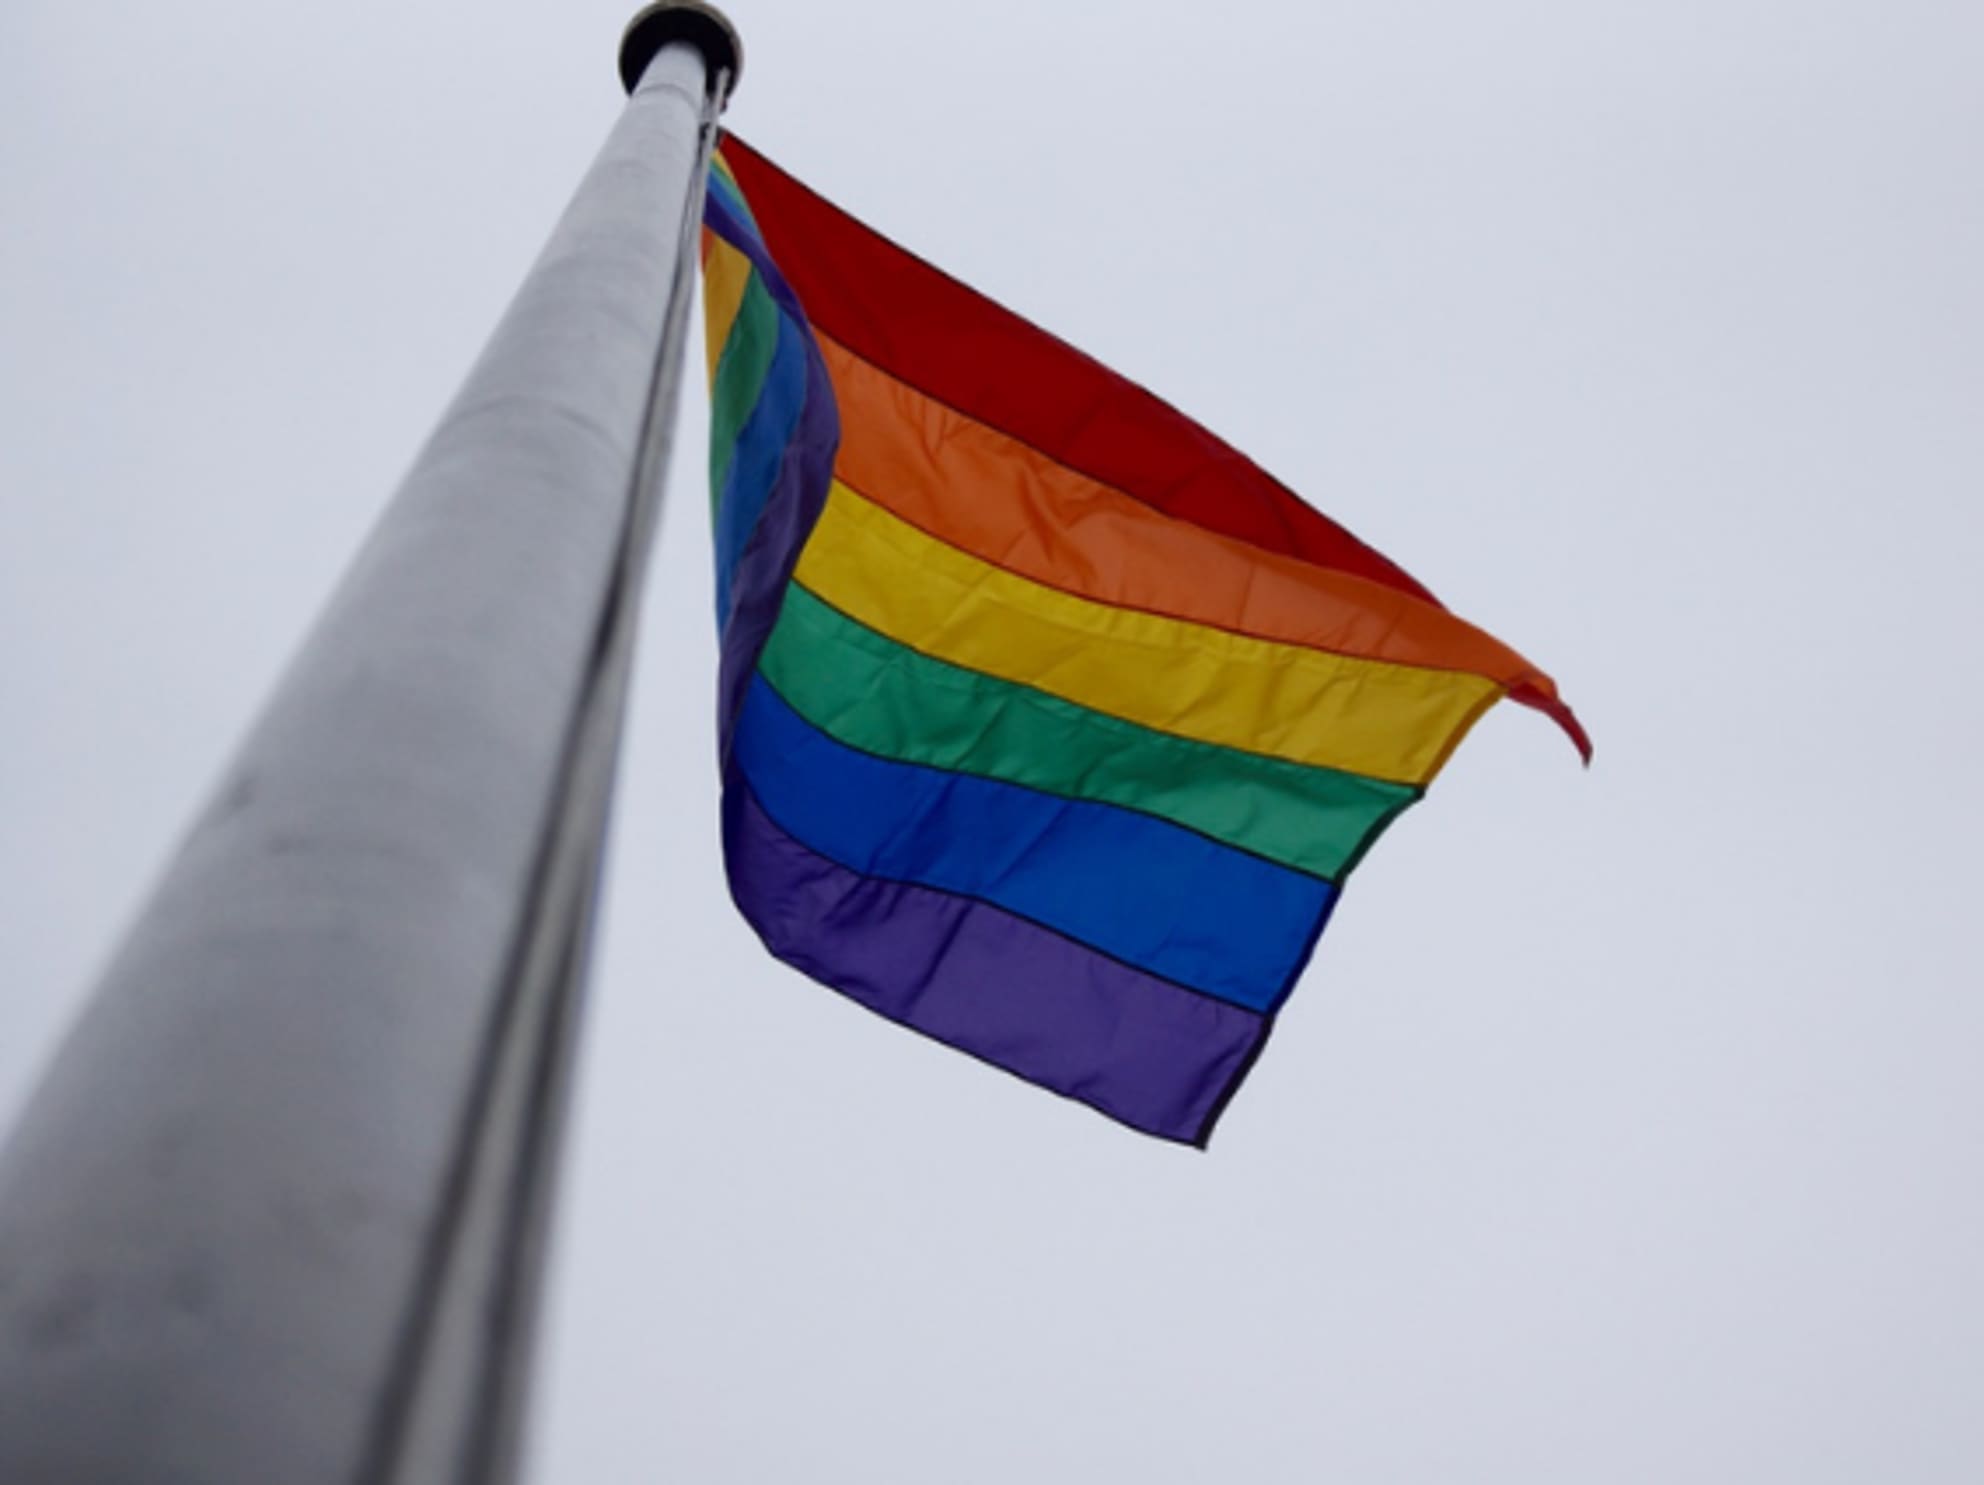 why hang the gay pride flag